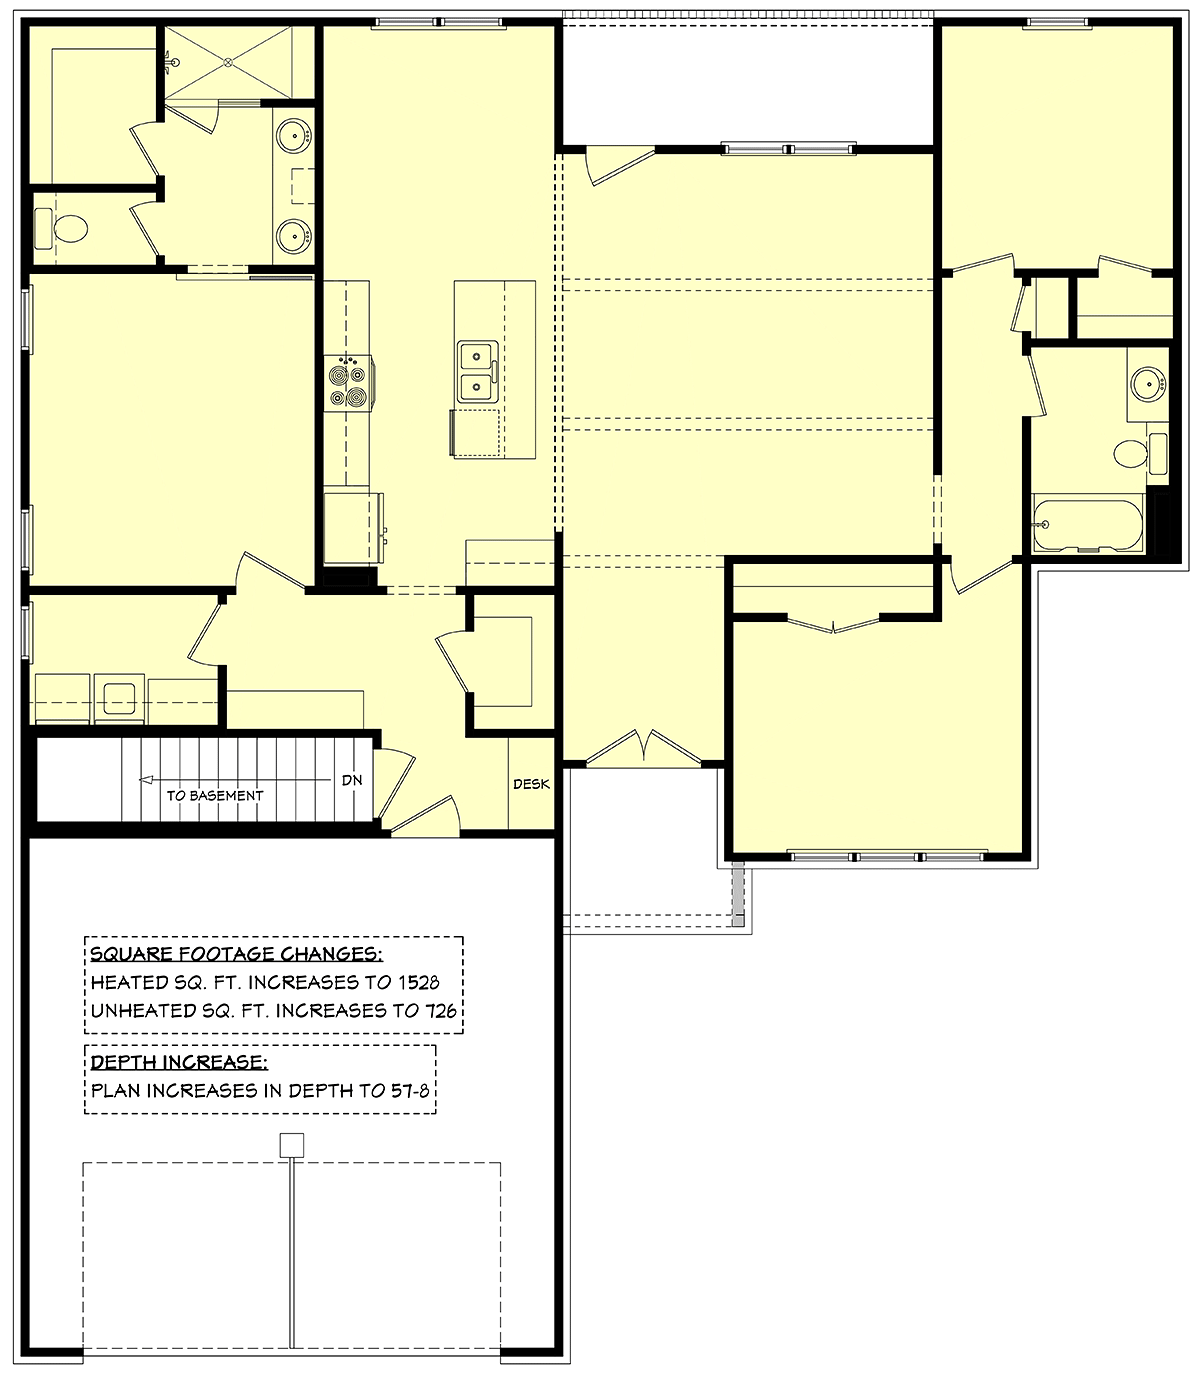 House Plan 80825 Alternate Level One